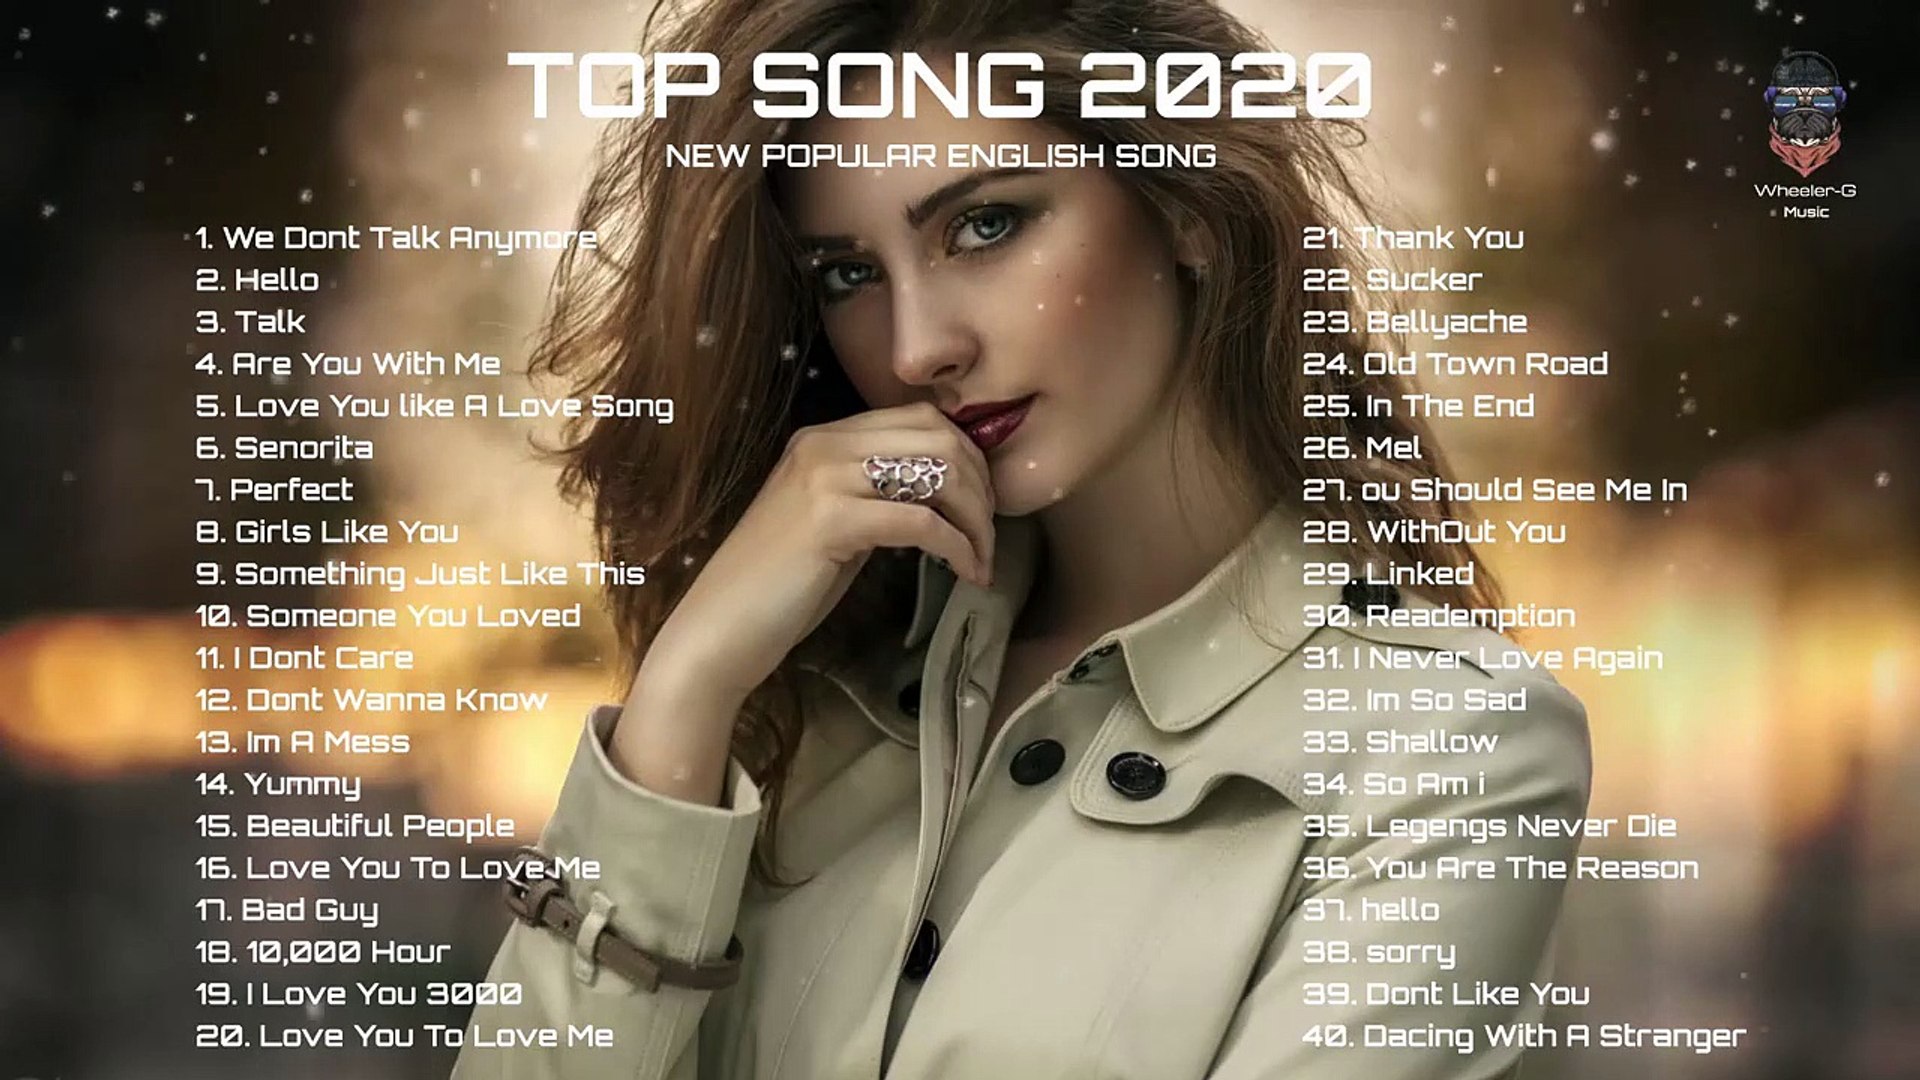 Music Top 50 Song Music Billboard - Music Top Songs 2020 [Wheeler-G]